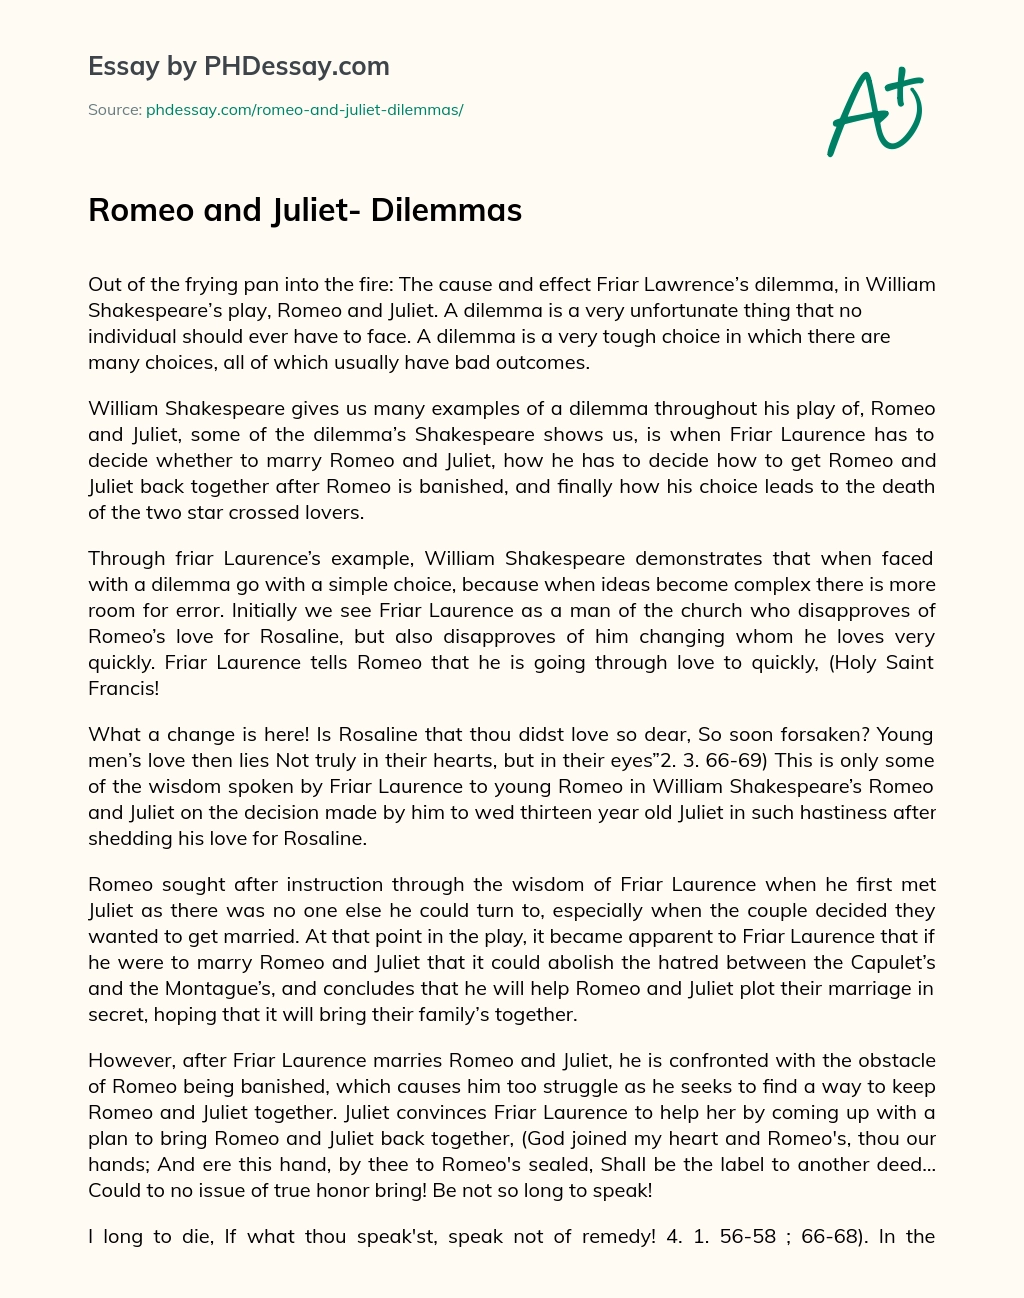 Romeo and Juliet- Dilemmas essay